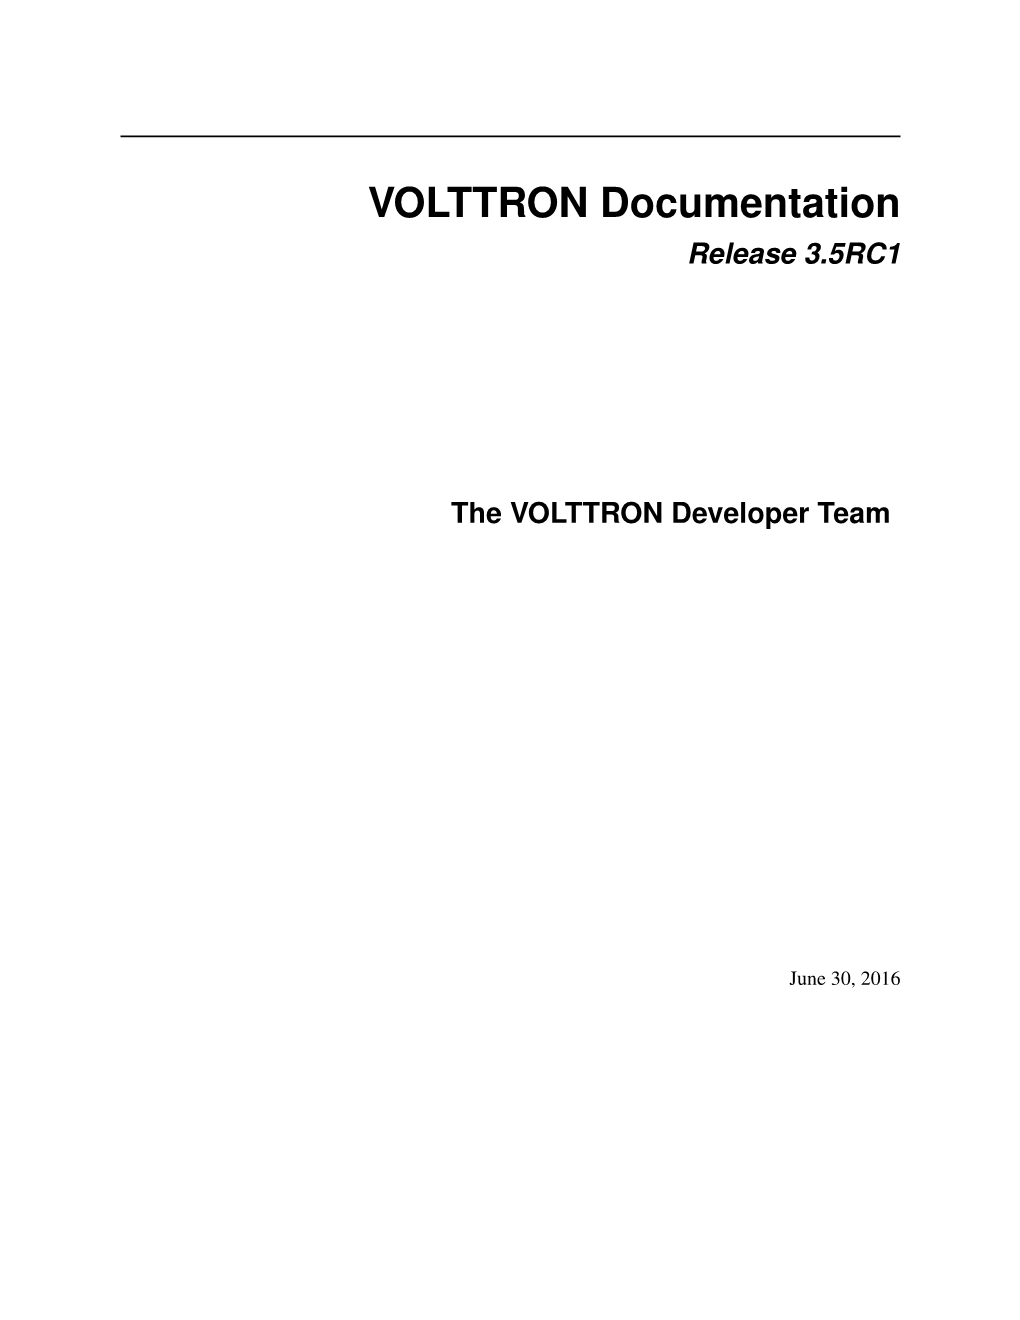 VOLTTRON Documentation Release 3.5RC1